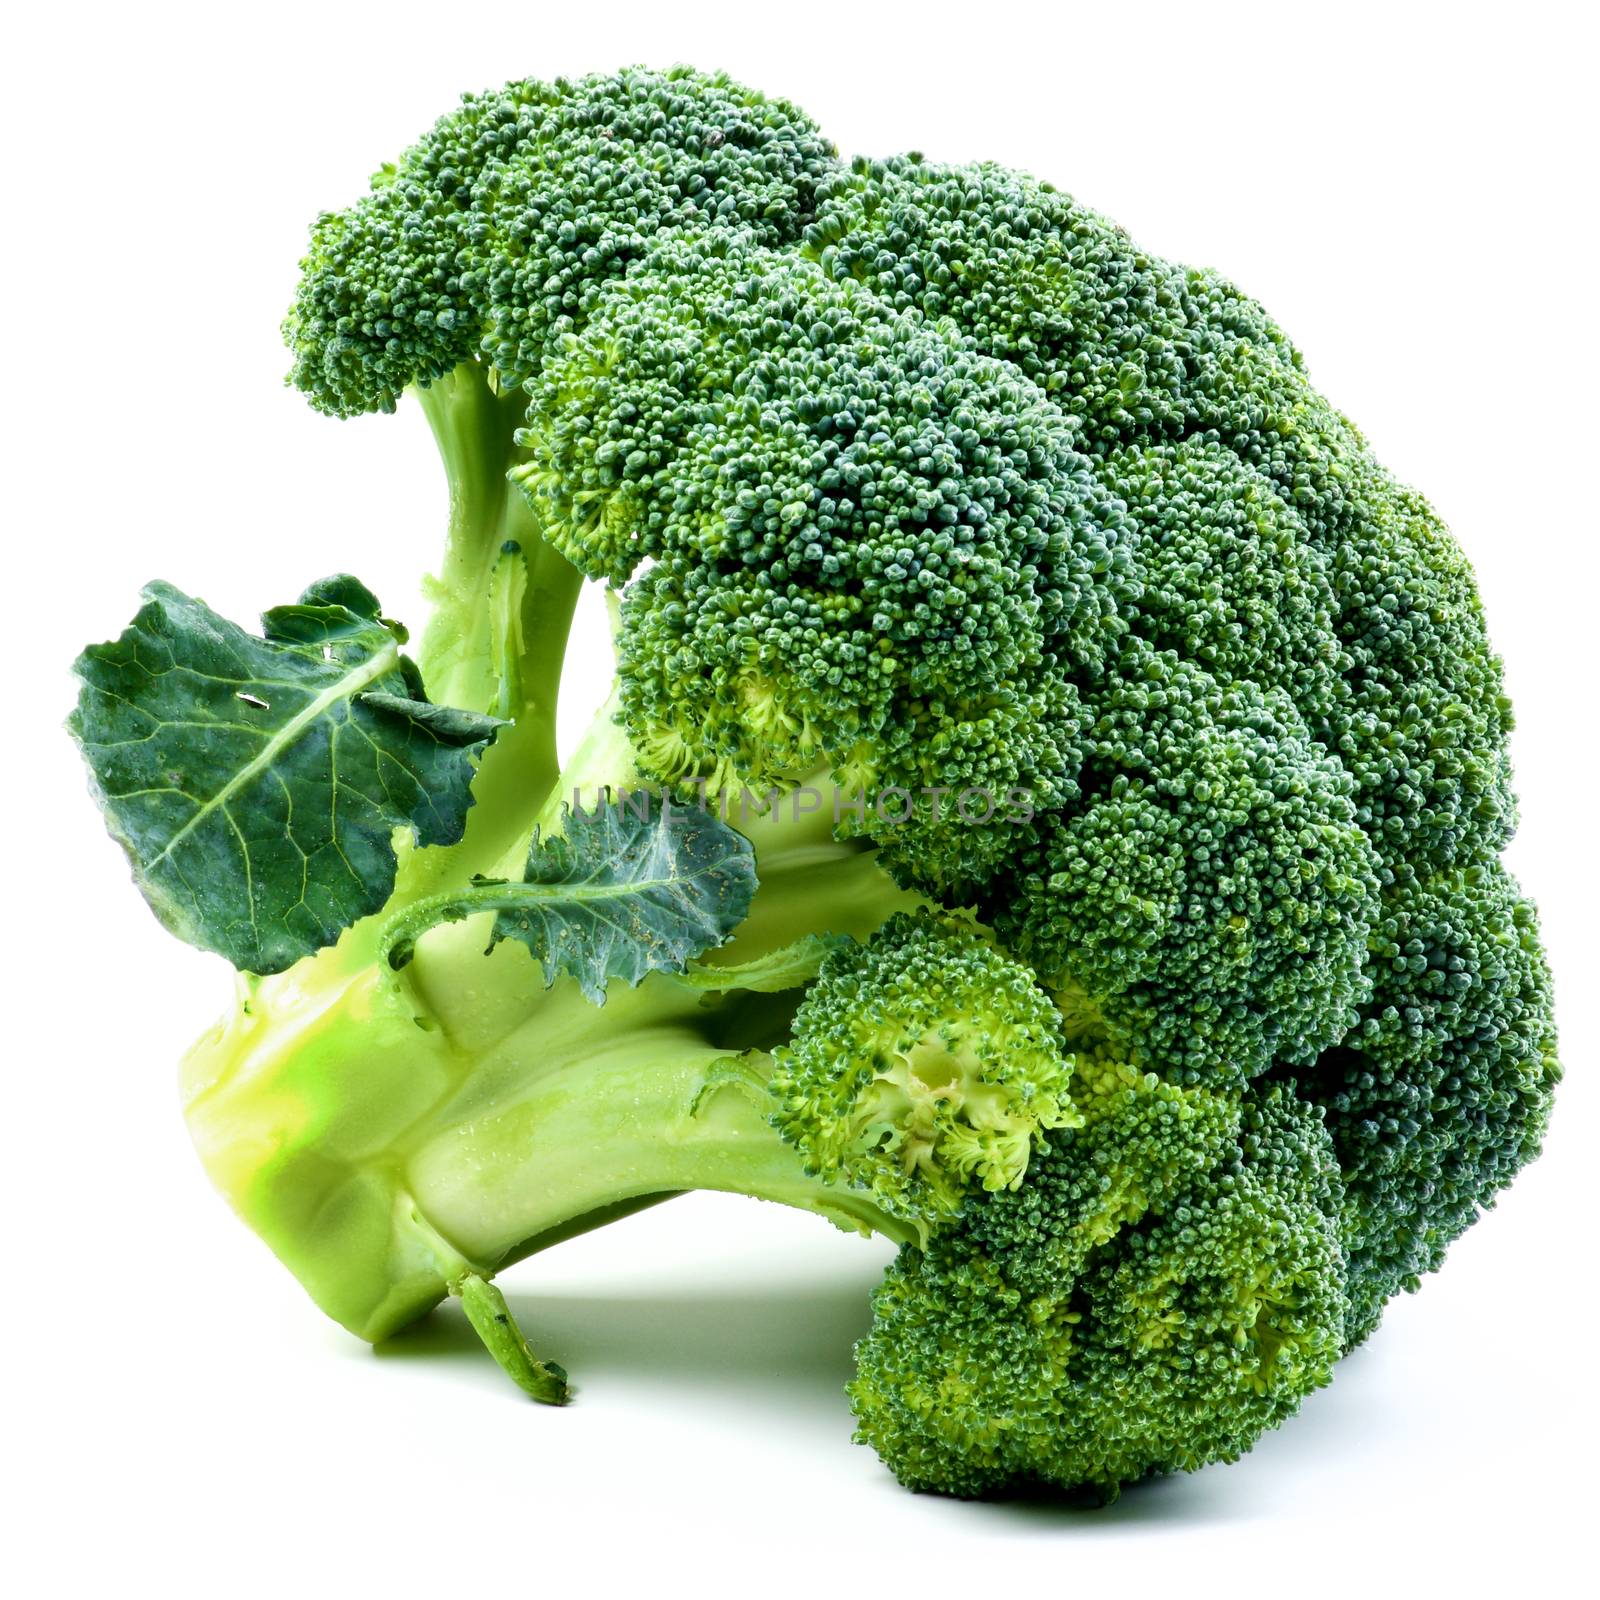 One Fresh Ripe Raw Fresh Broccoli with Leafs closeup on White background